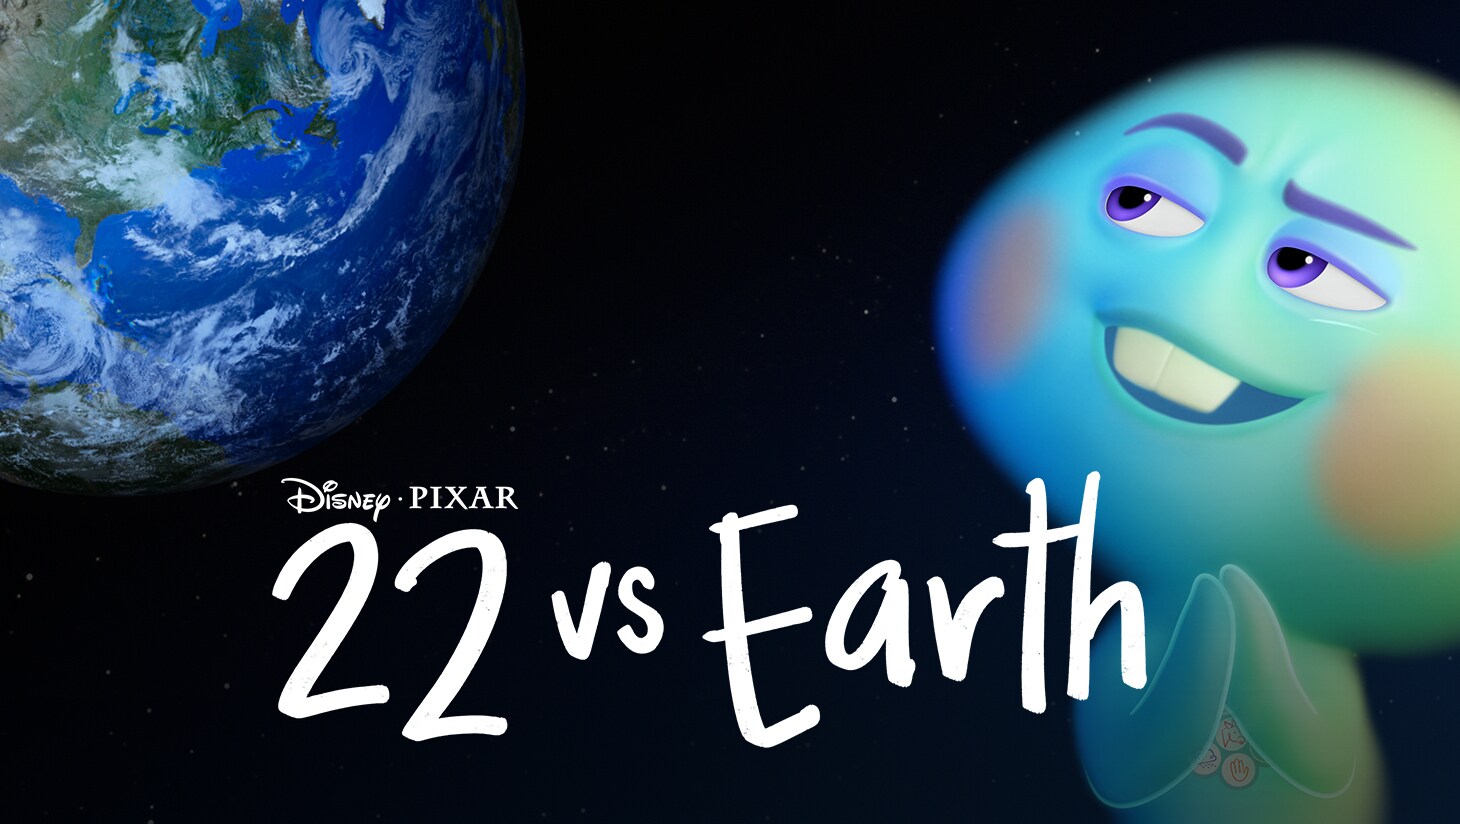 22 vs. Earth keyart